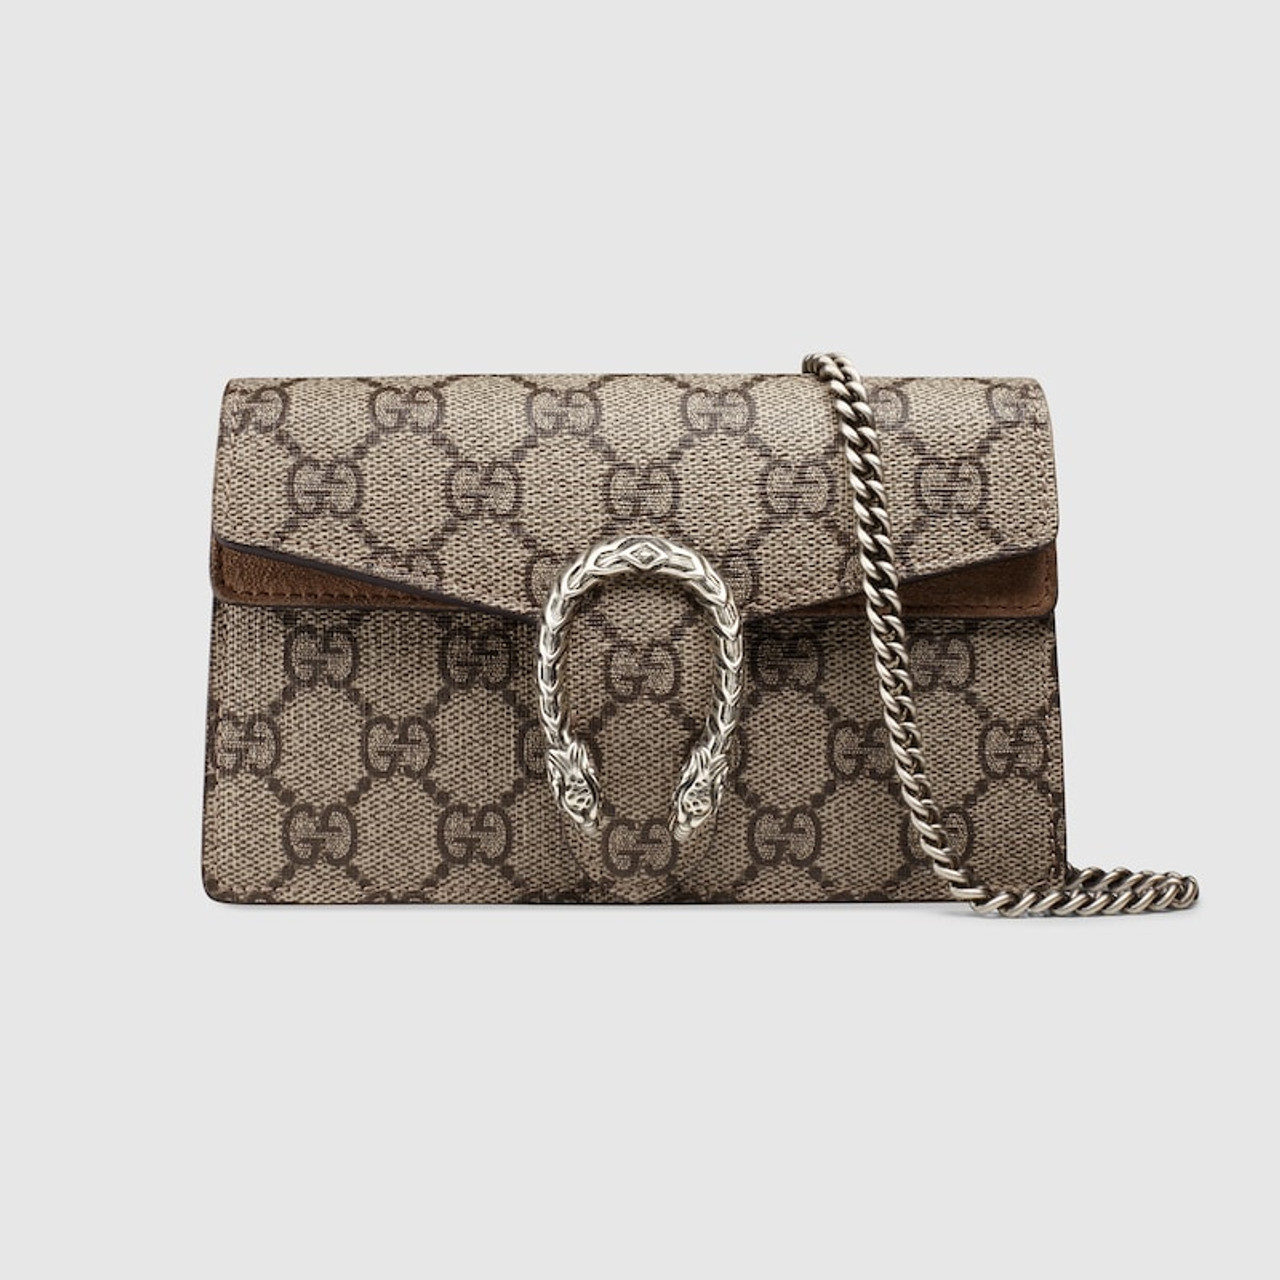 Gucci Dionysus Bag Leather Small Black | eBay